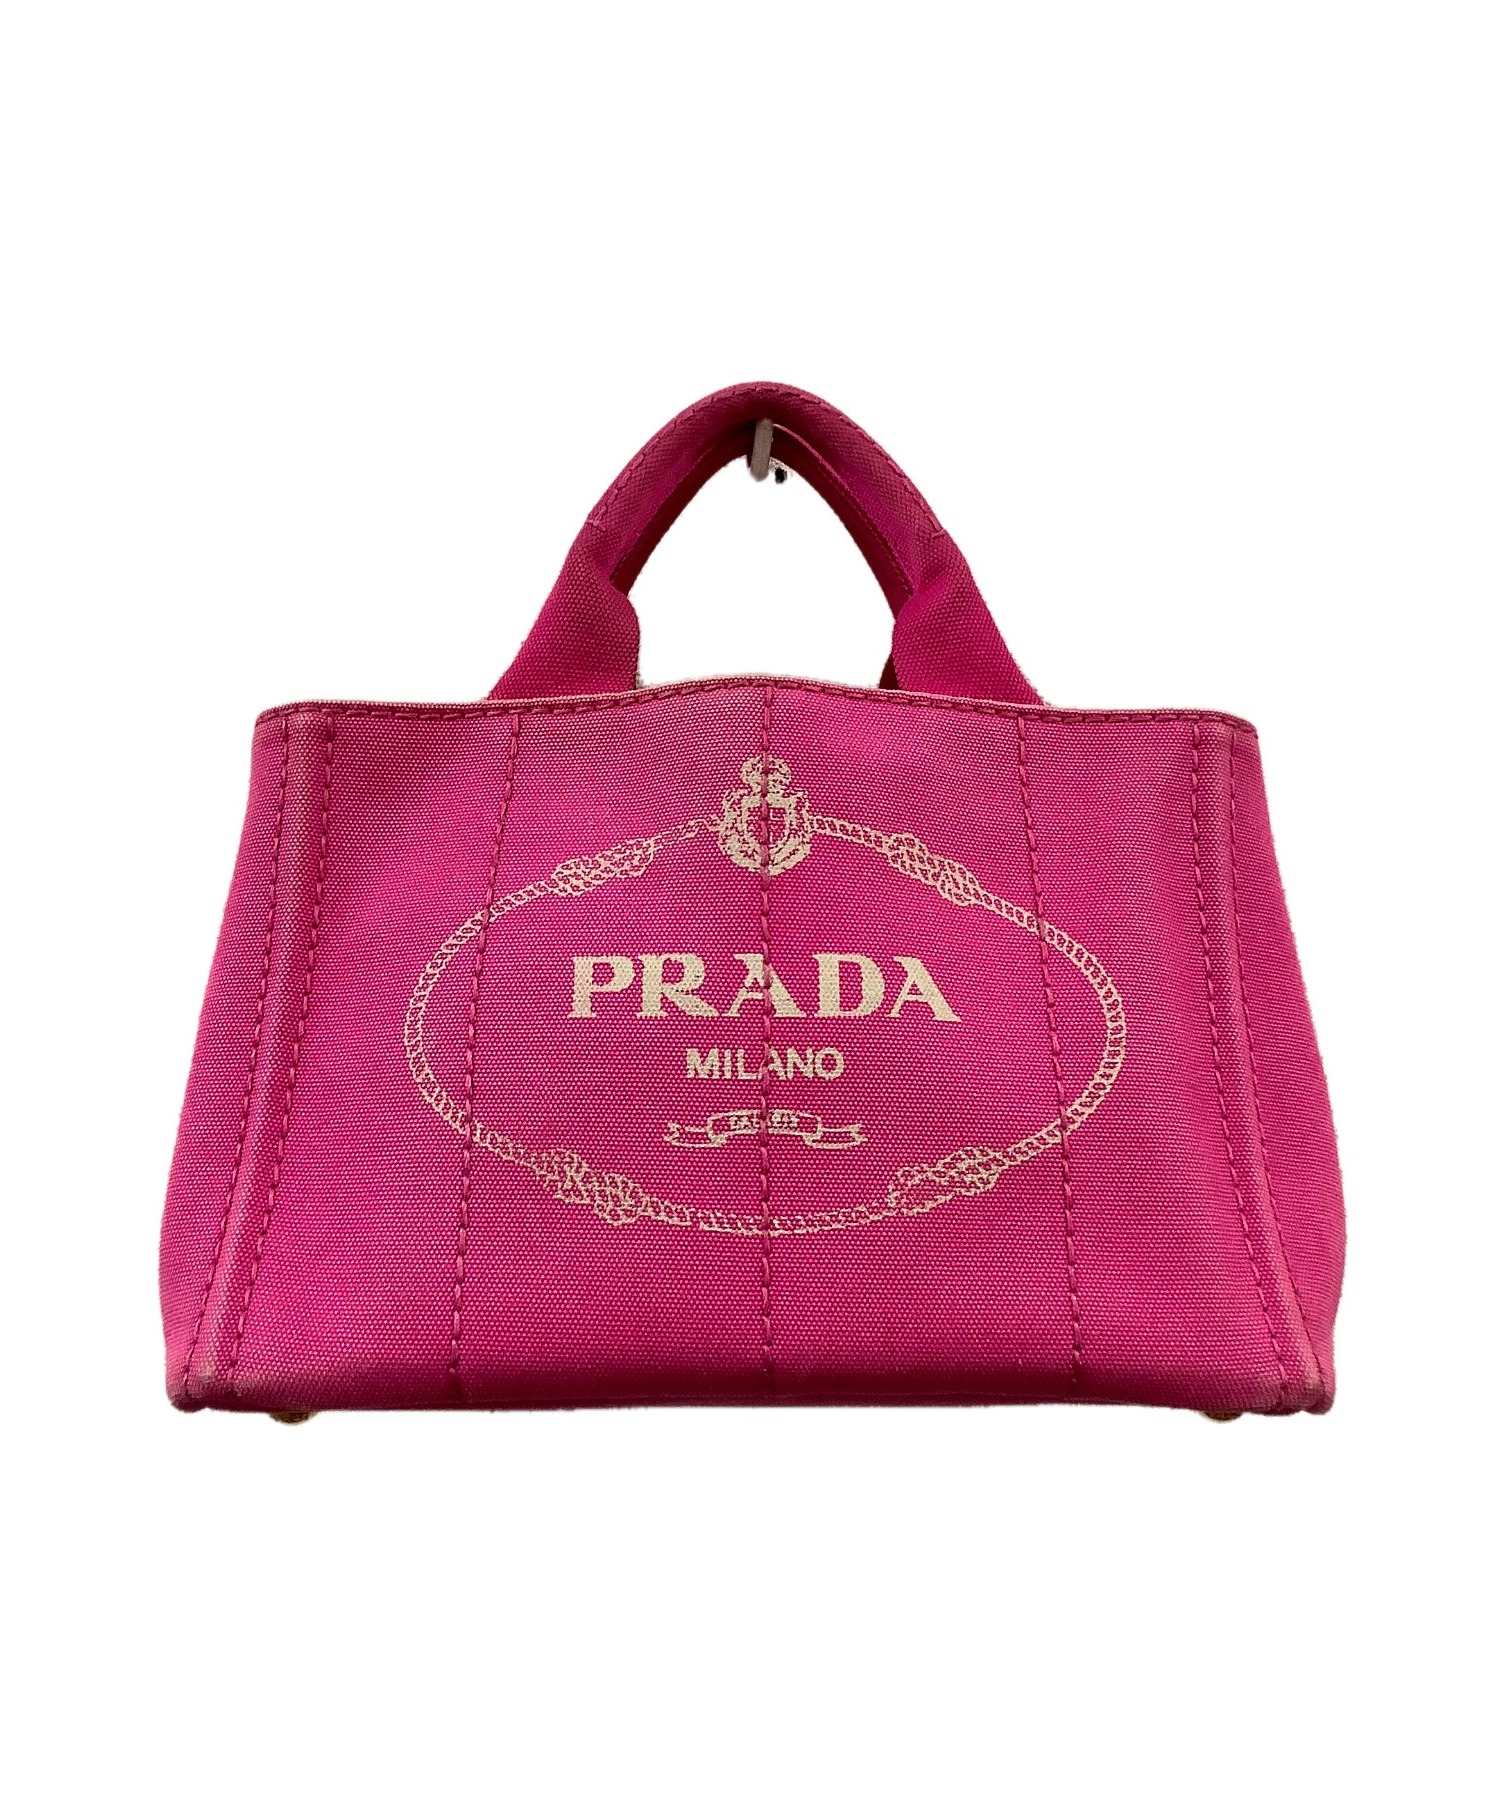 PRADA (プラダ) ハンドバッグ ピンク カナパ